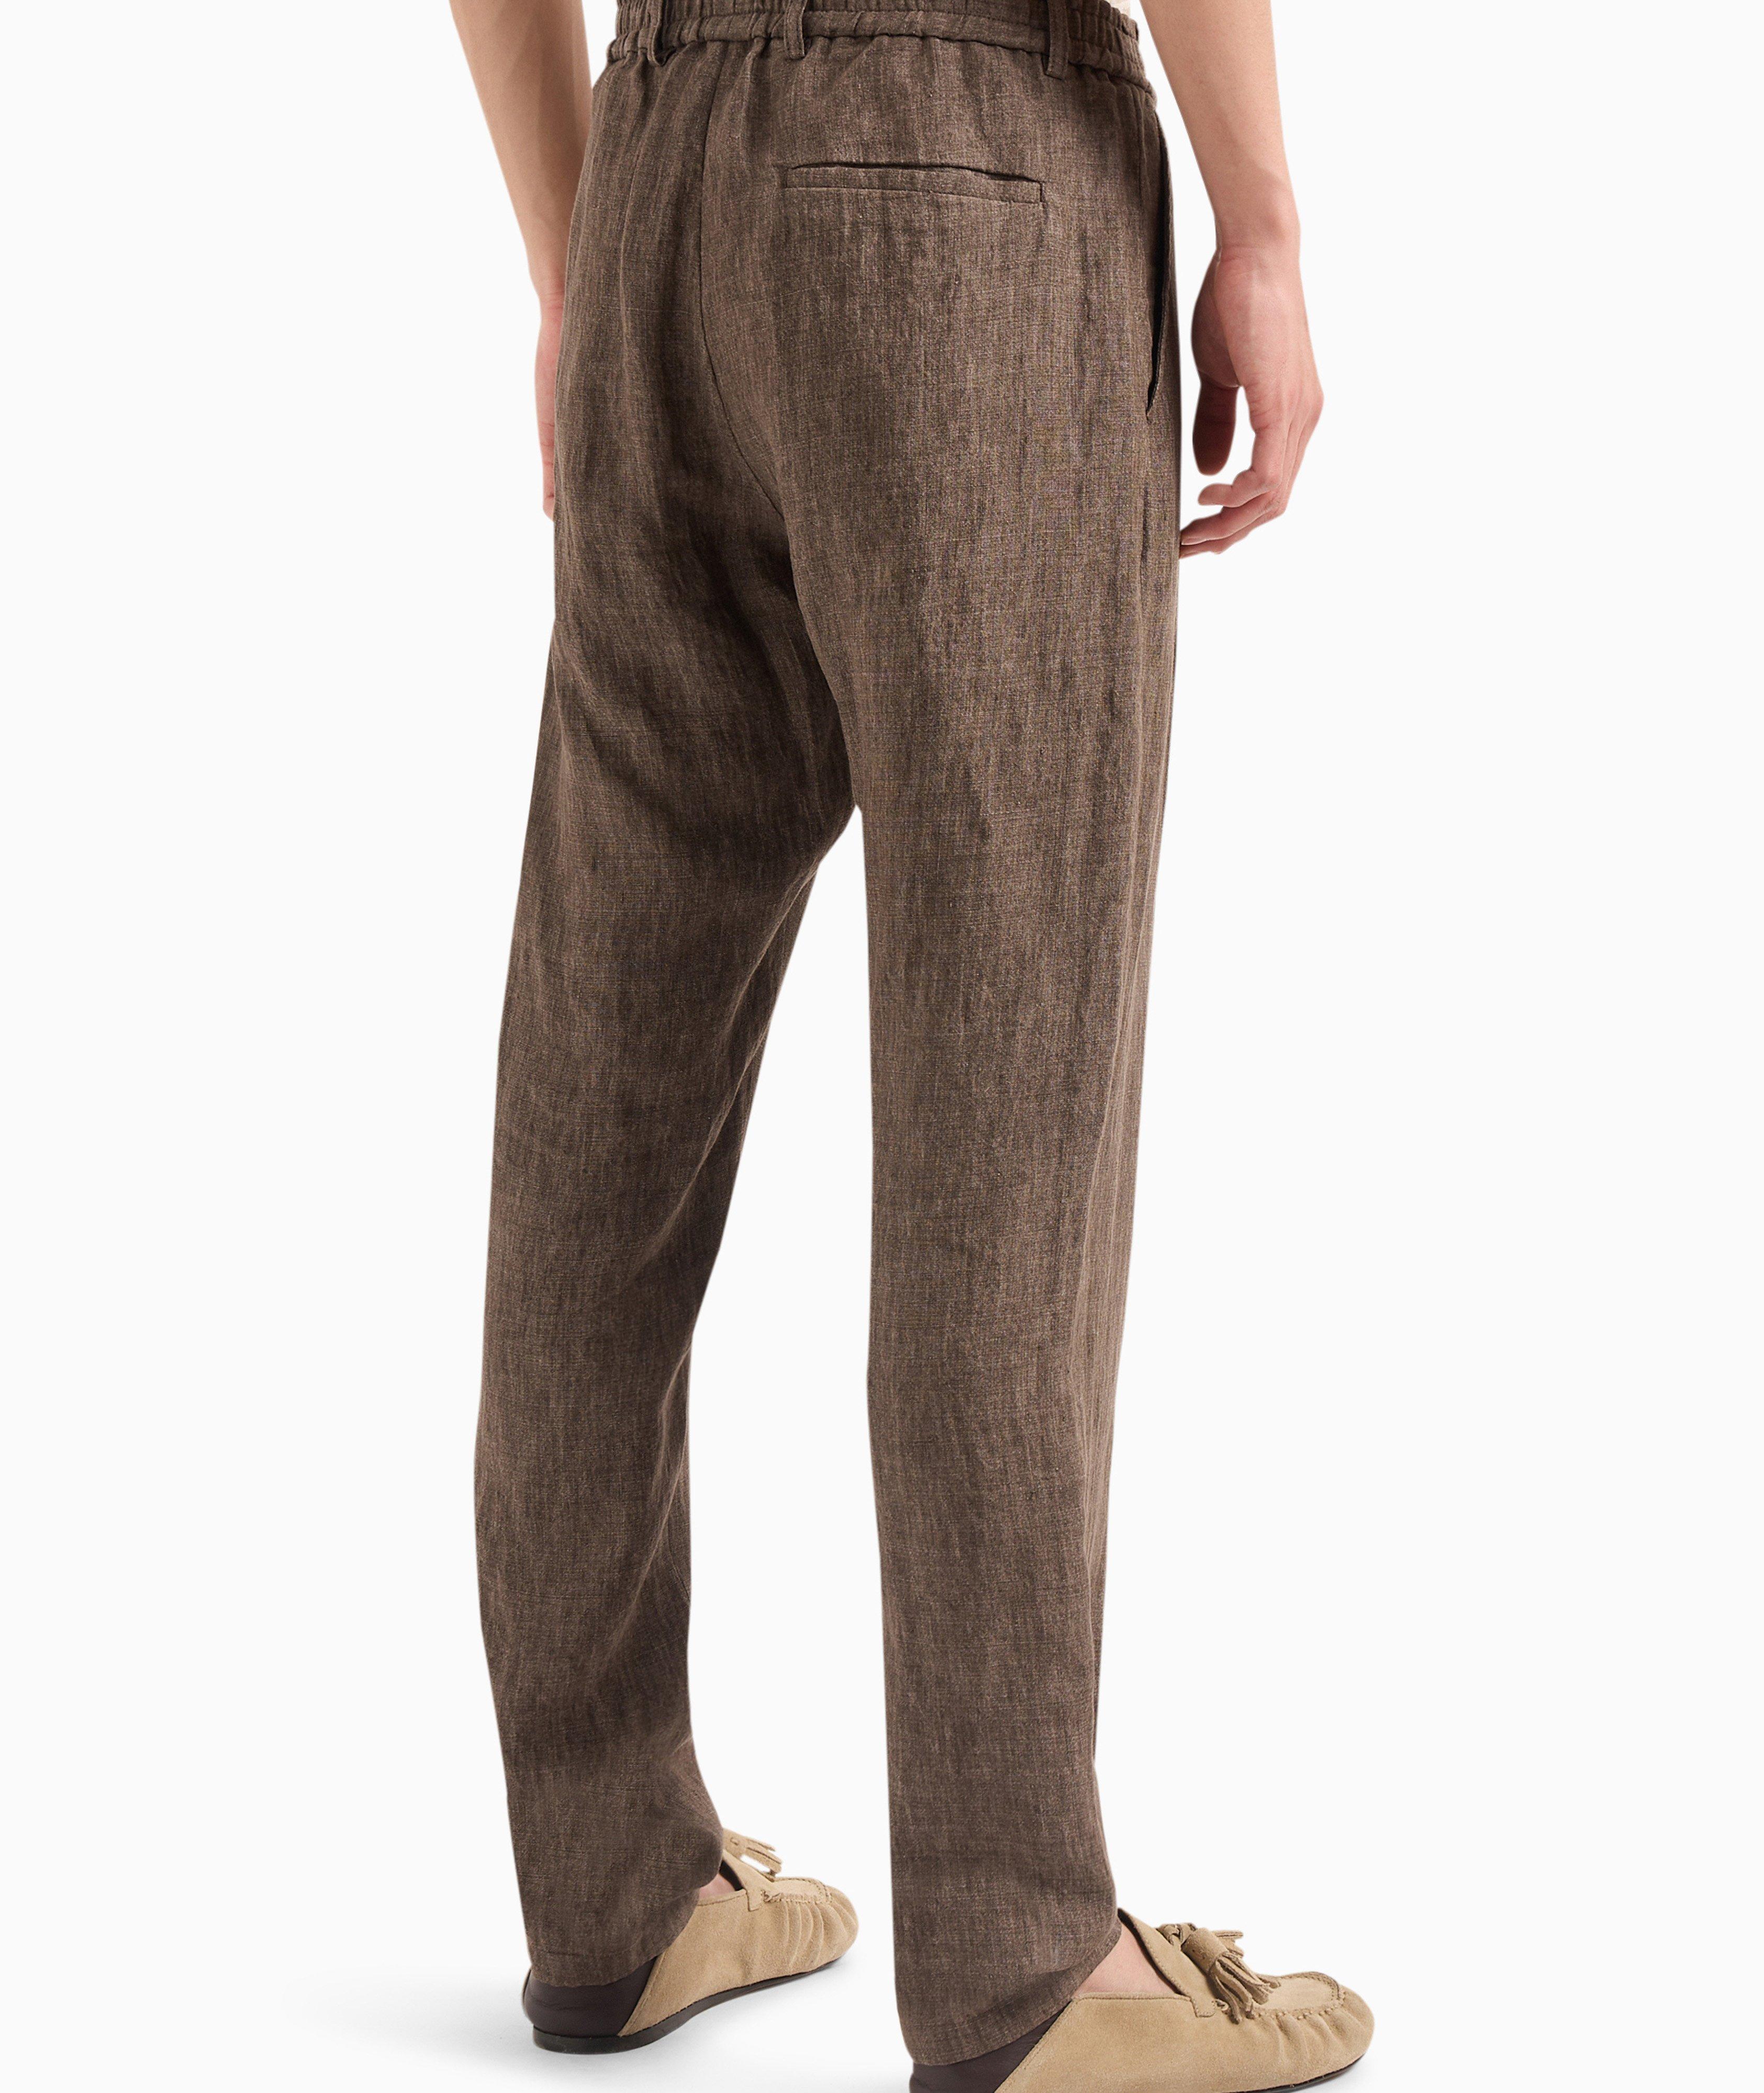 Pantalon en crêpe de lin délavé image 2